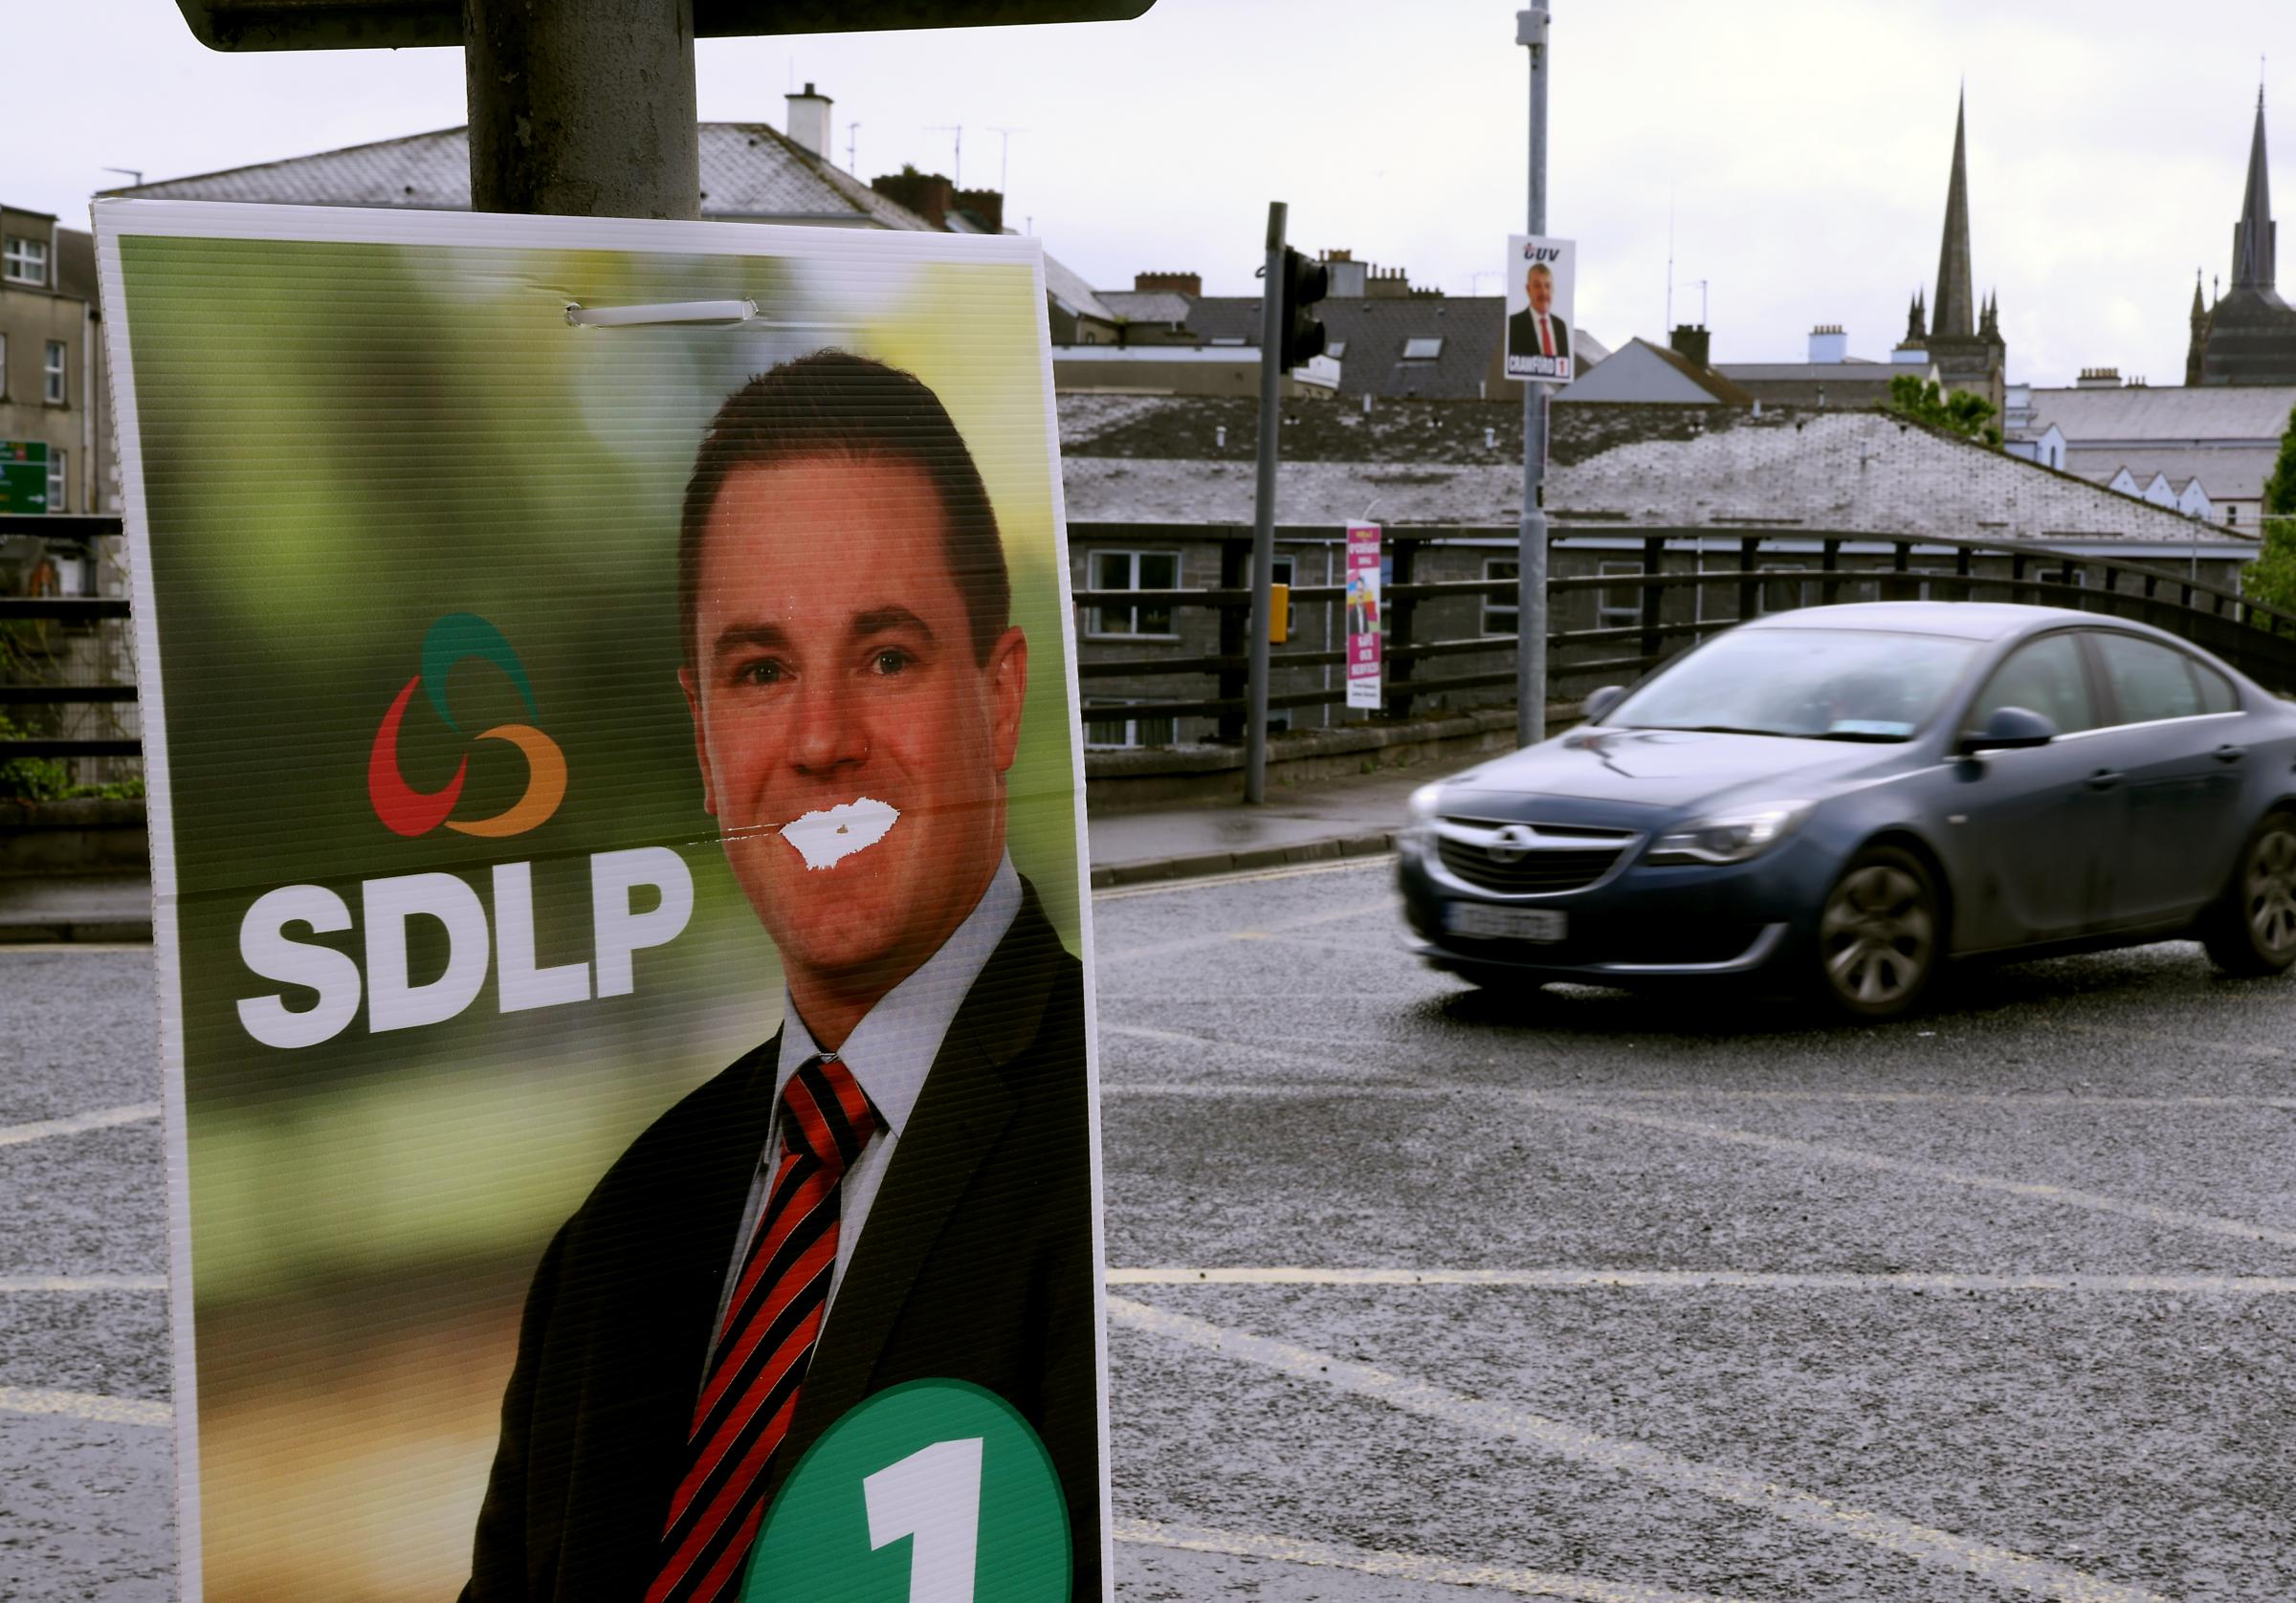 SDLP Posters in Enniskillen vandalised.